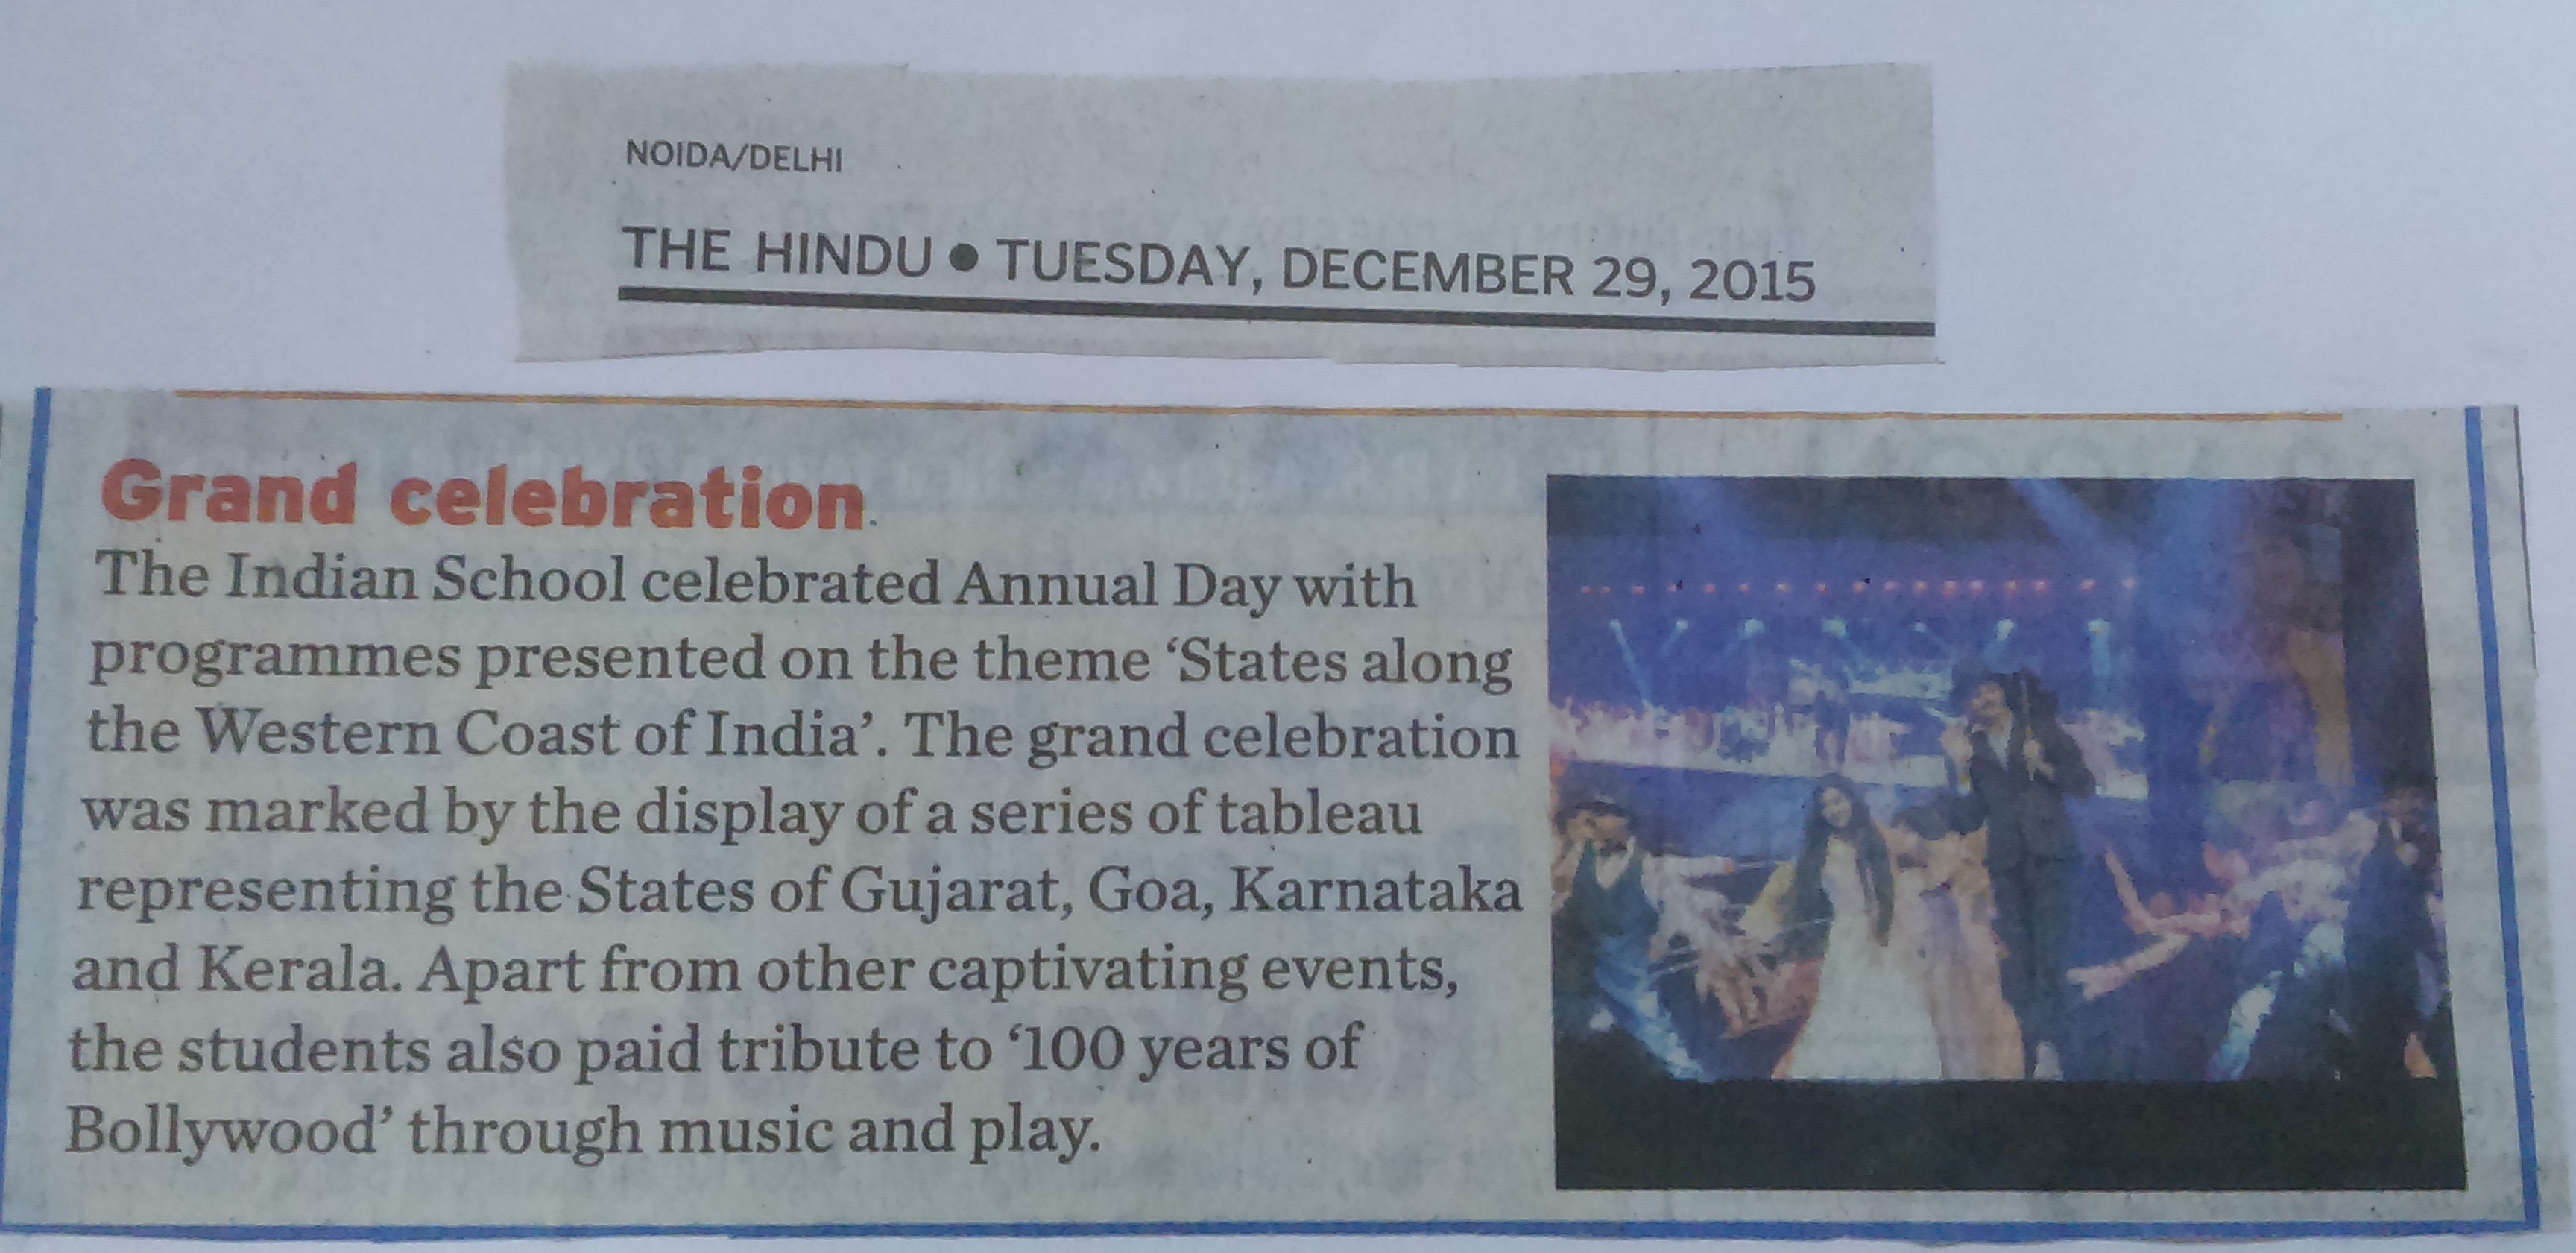 THE HINDU, TUESDAY, 29 DECEMBER 2015